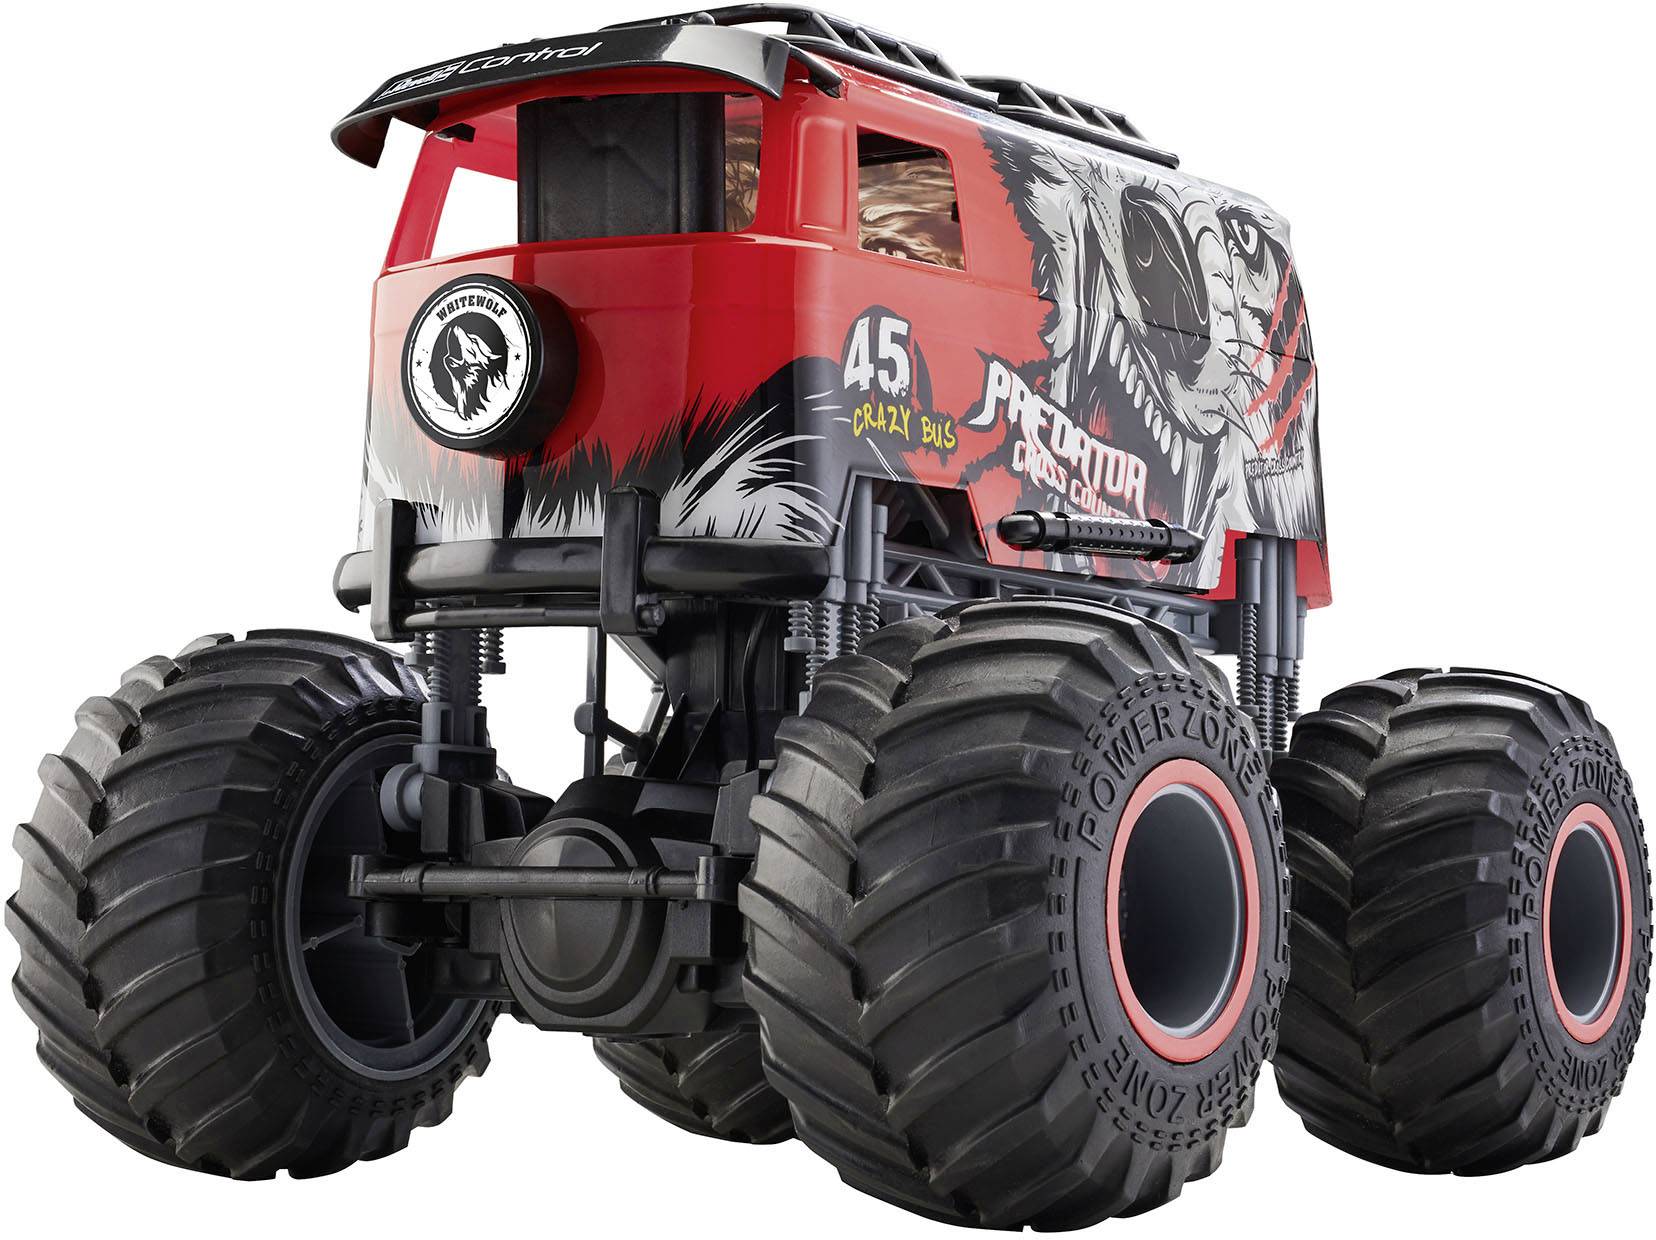 Rtr Rc Monster Truck | tunersread.com